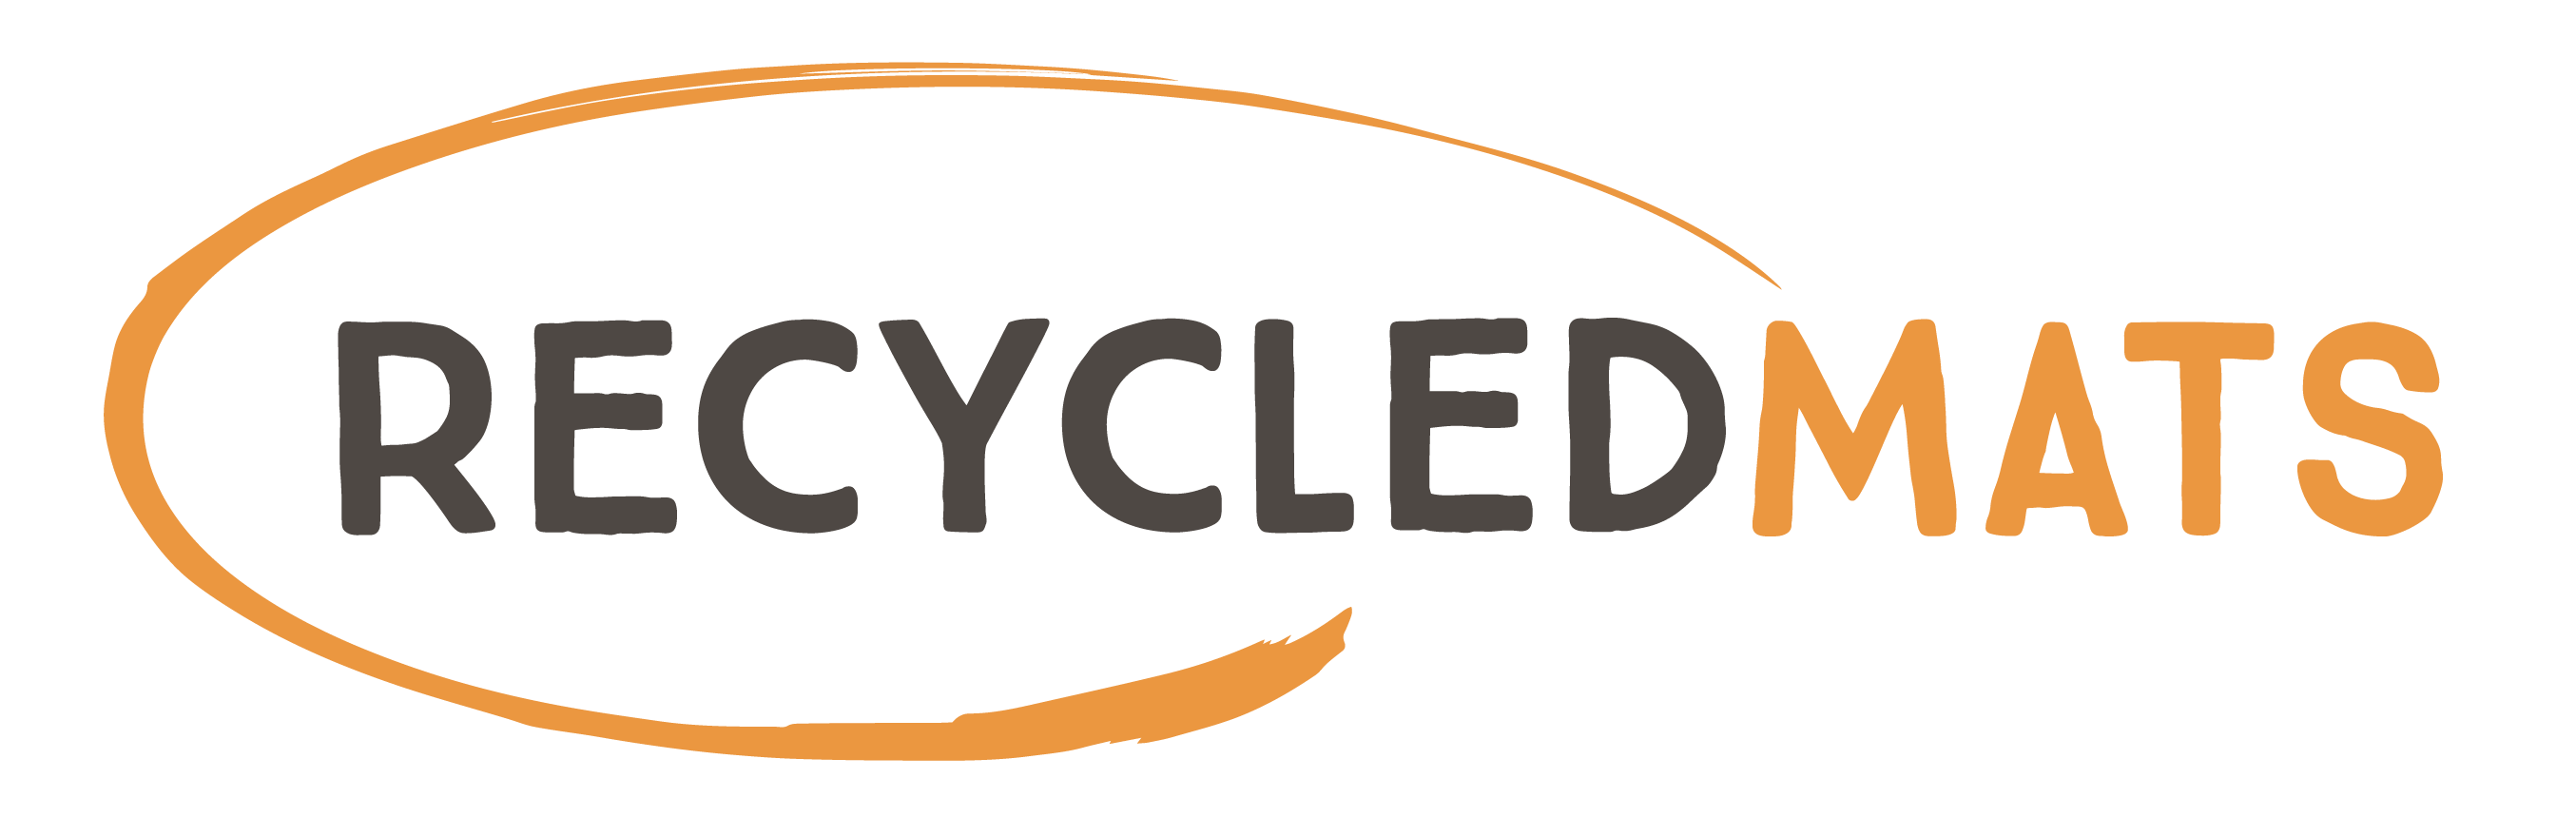 Recycled Mats  logo